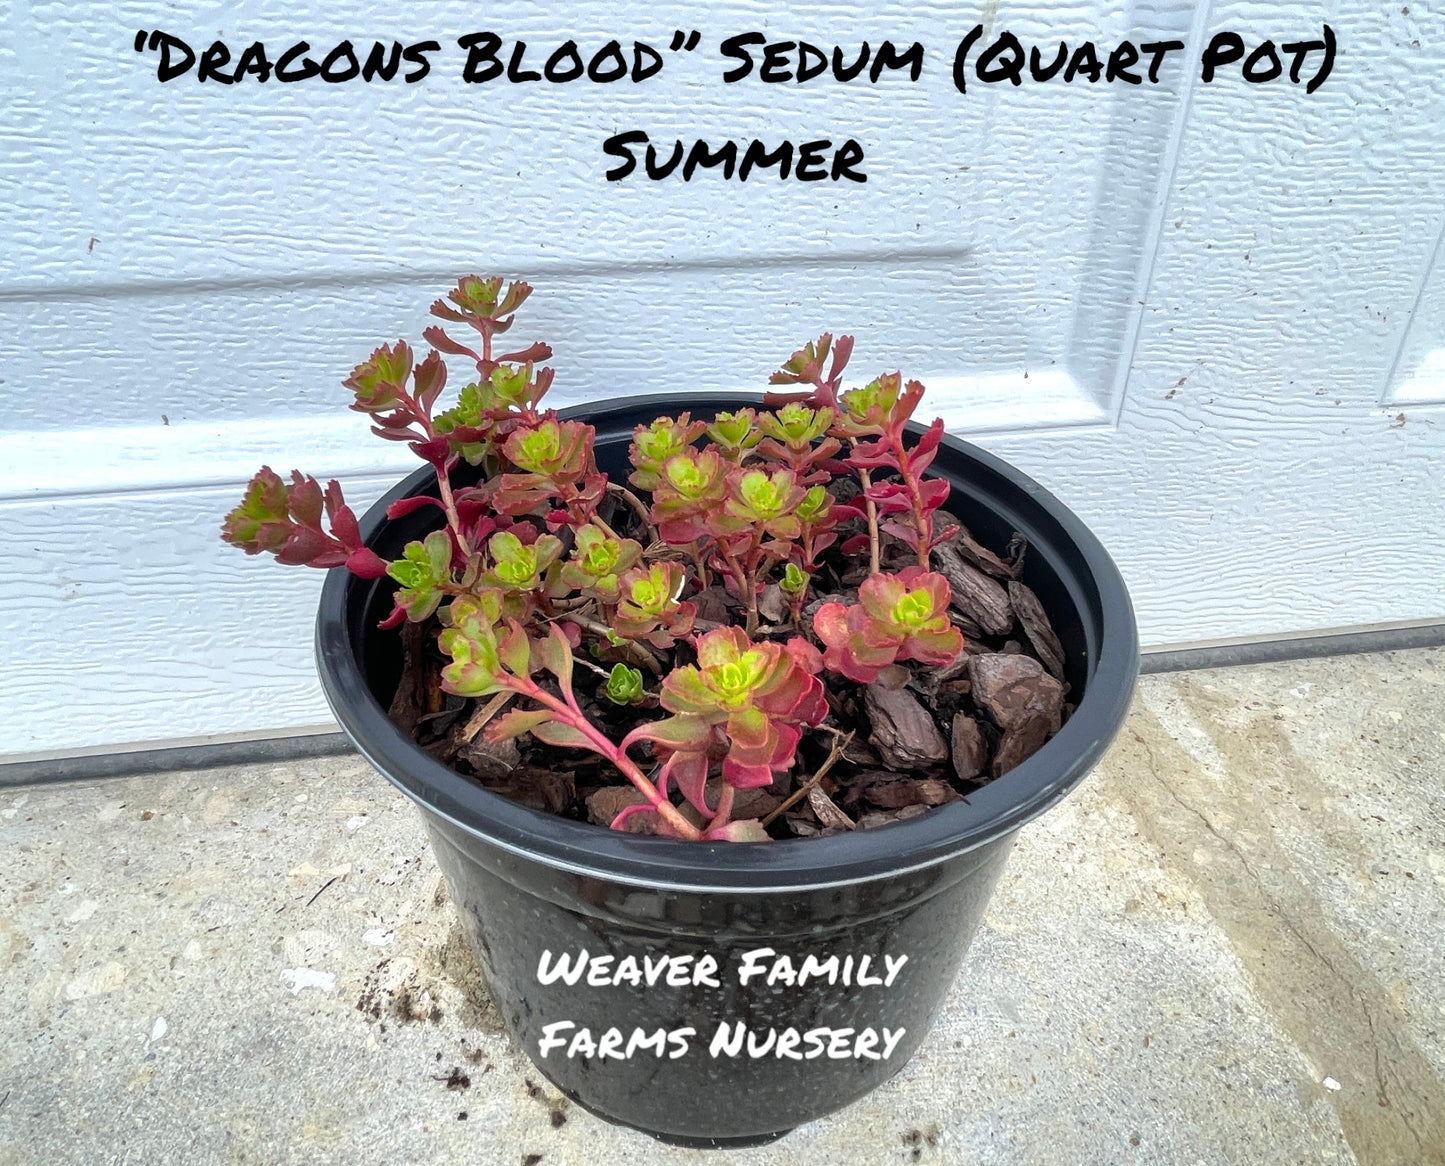 Sedum Stonecrop “Dragons blood” - Weaver Family Farms Nursery